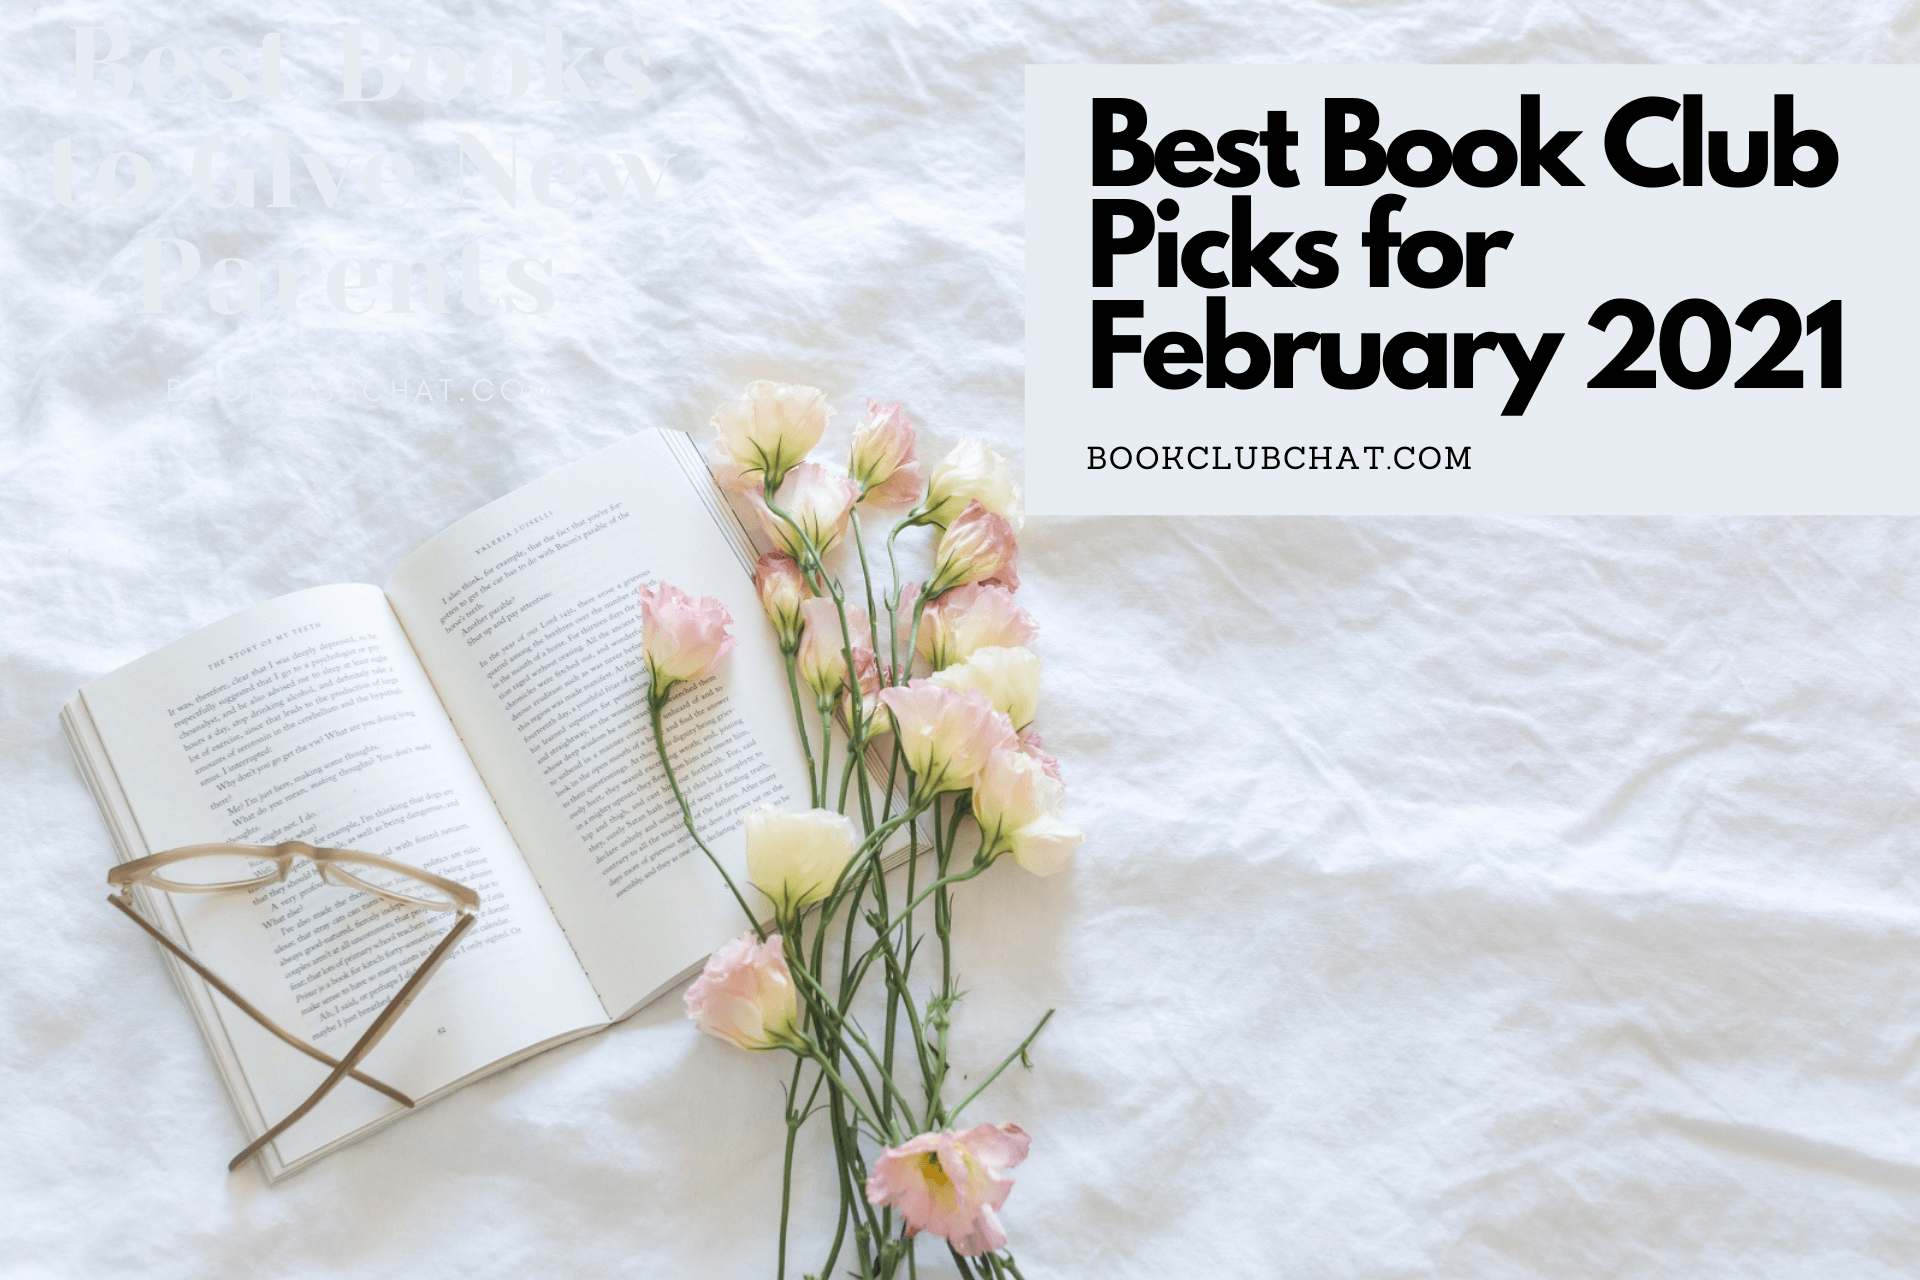 Best Book Club Picks for February 2021